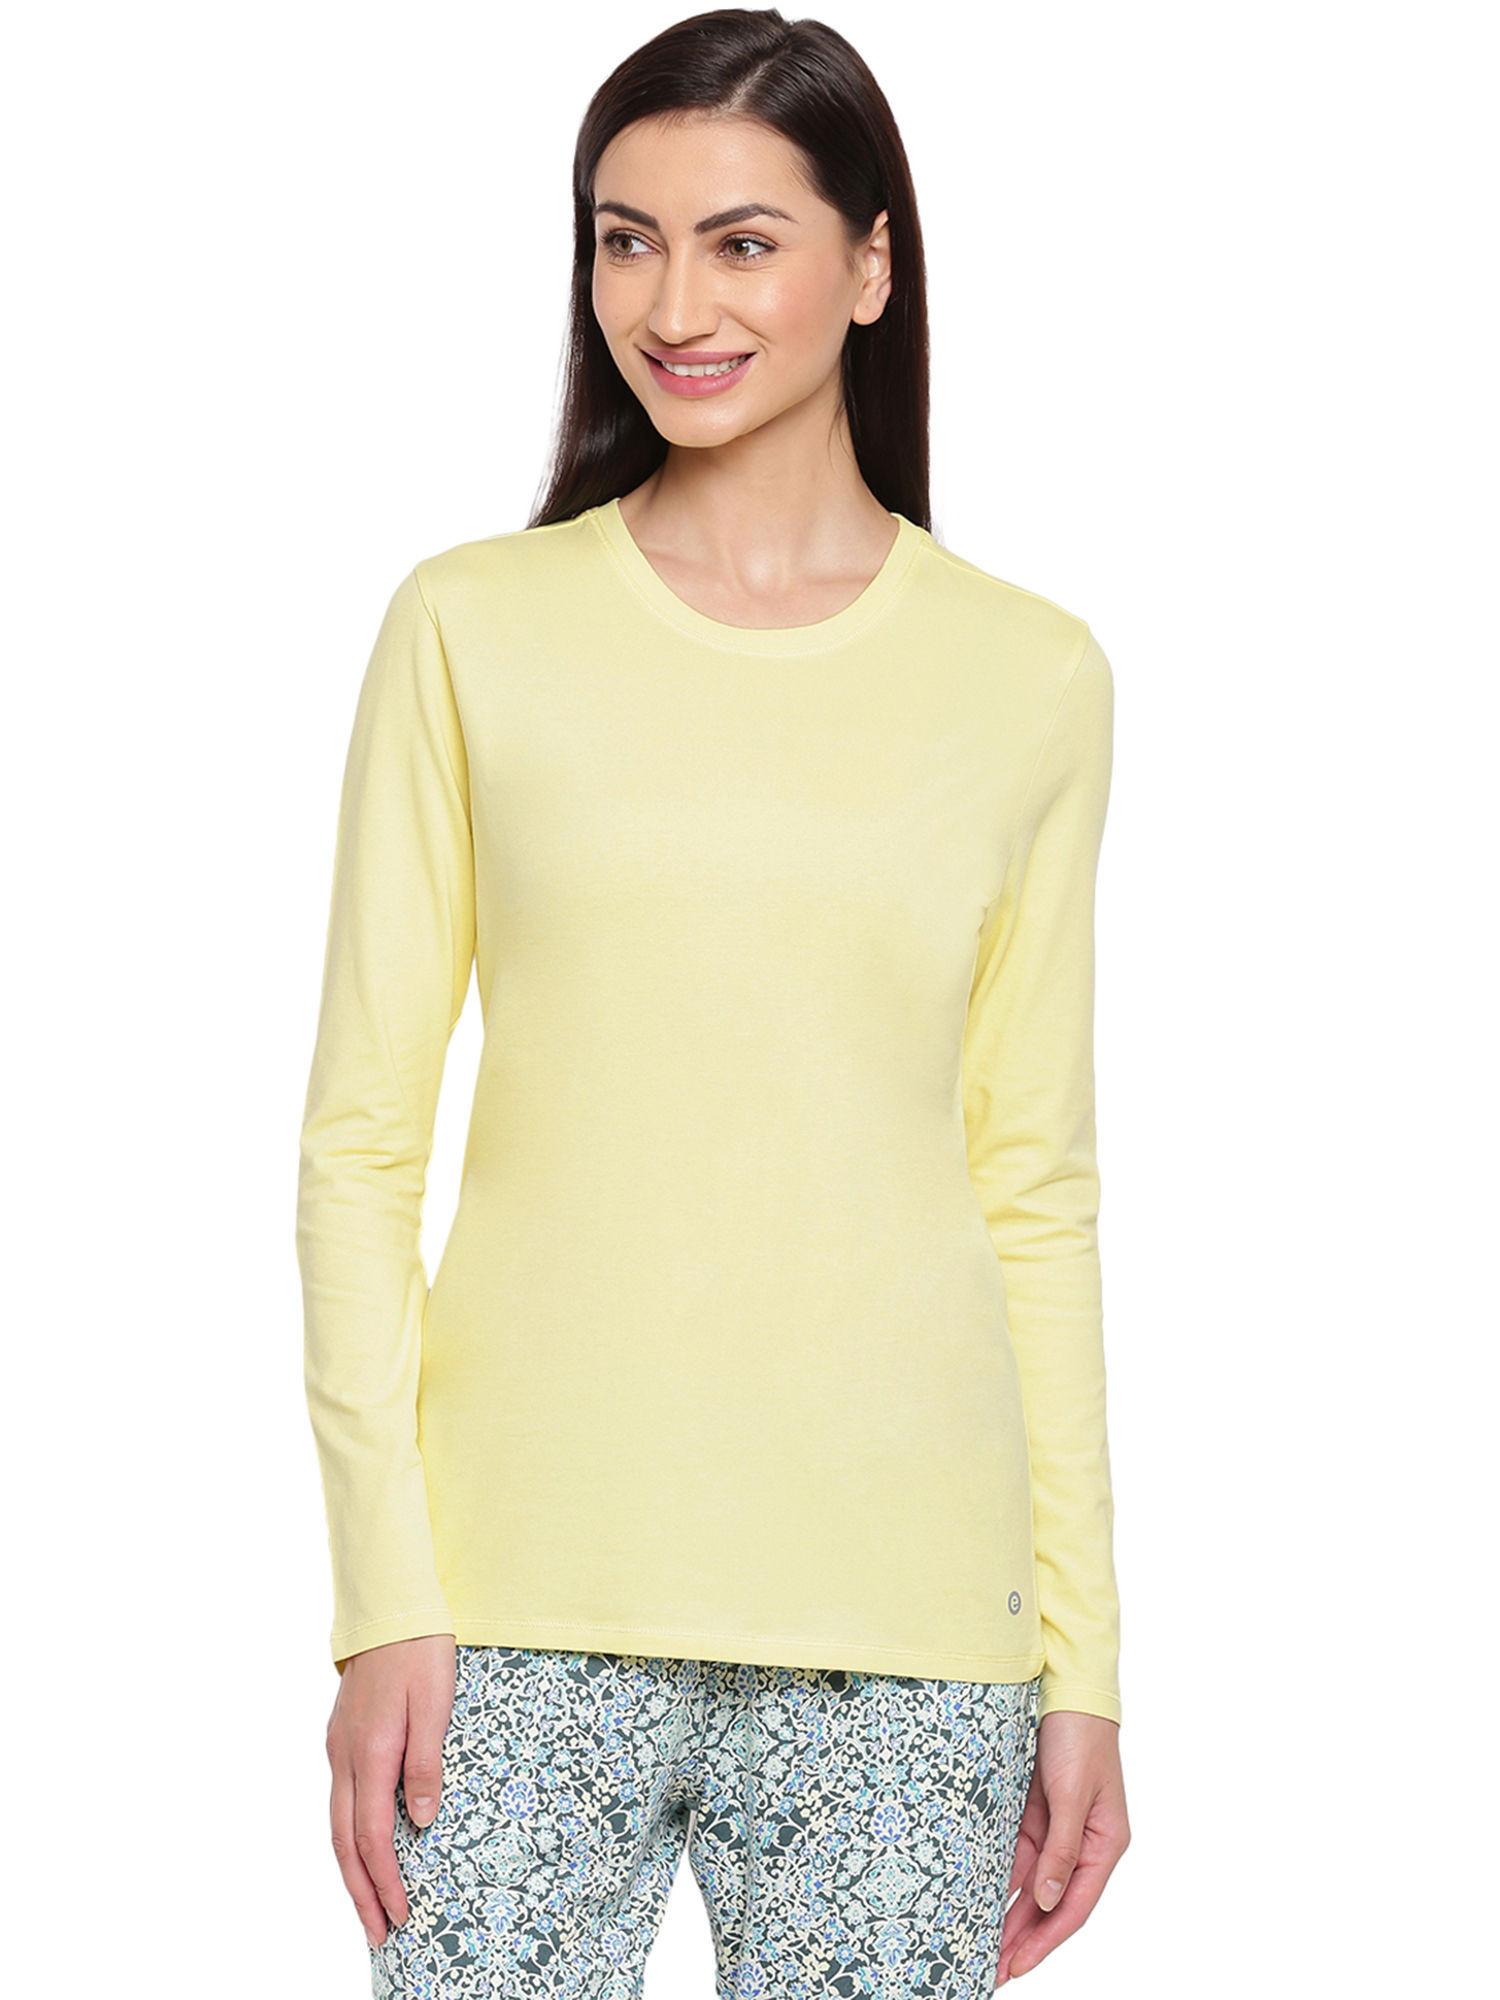 essentials-e057-womens-slim-fit-cotton-spandex-basic-tee---yellow